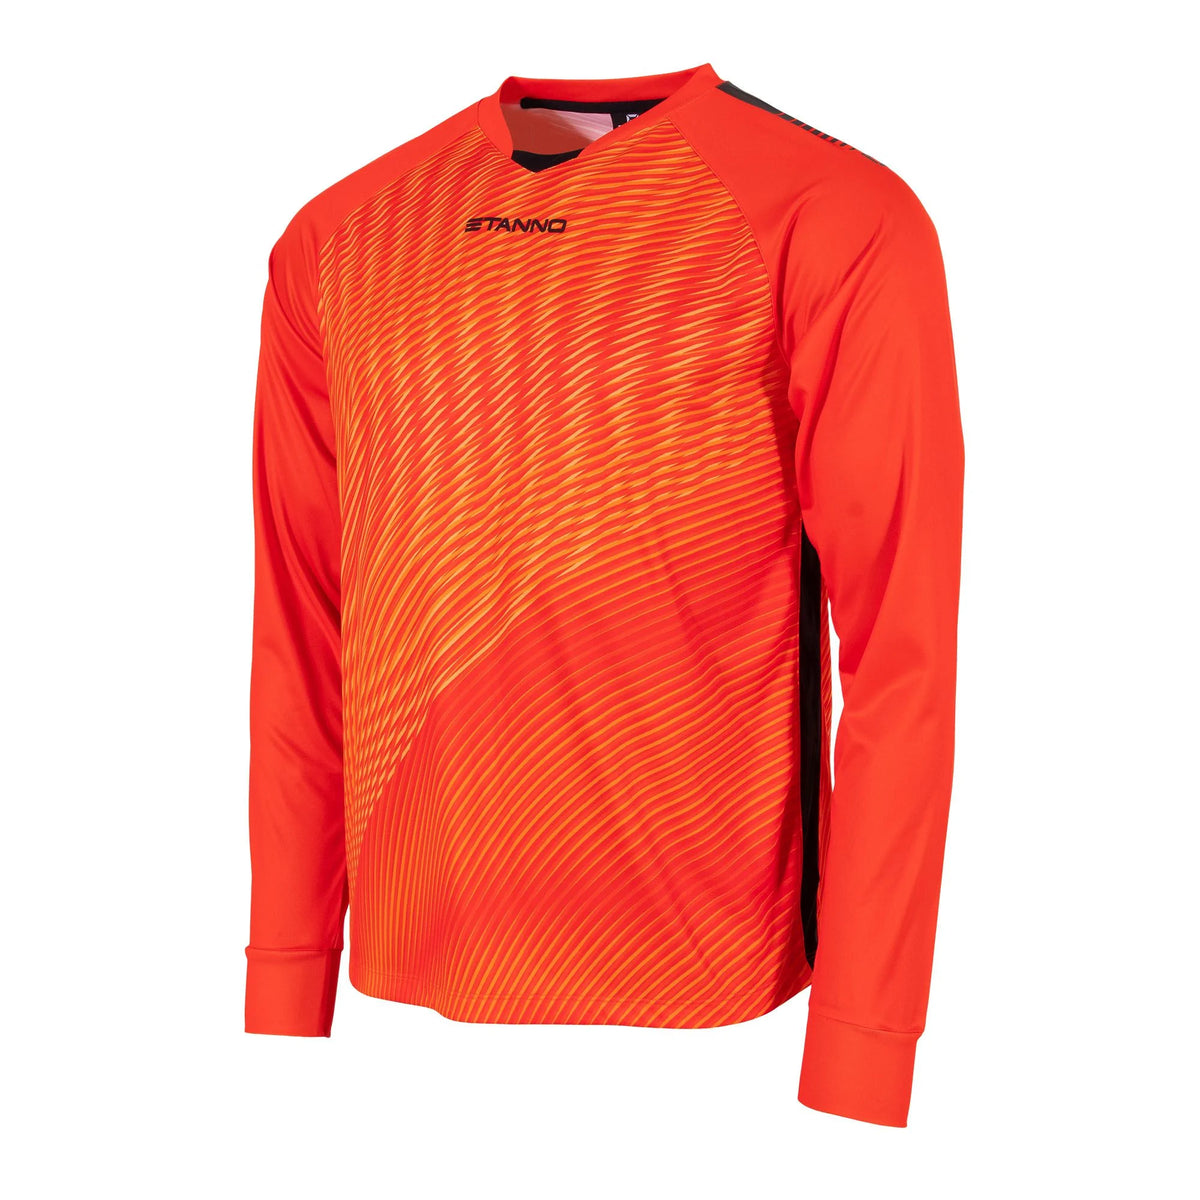 Vortex Goalkeeper Shirt Long Sleeve in Adult